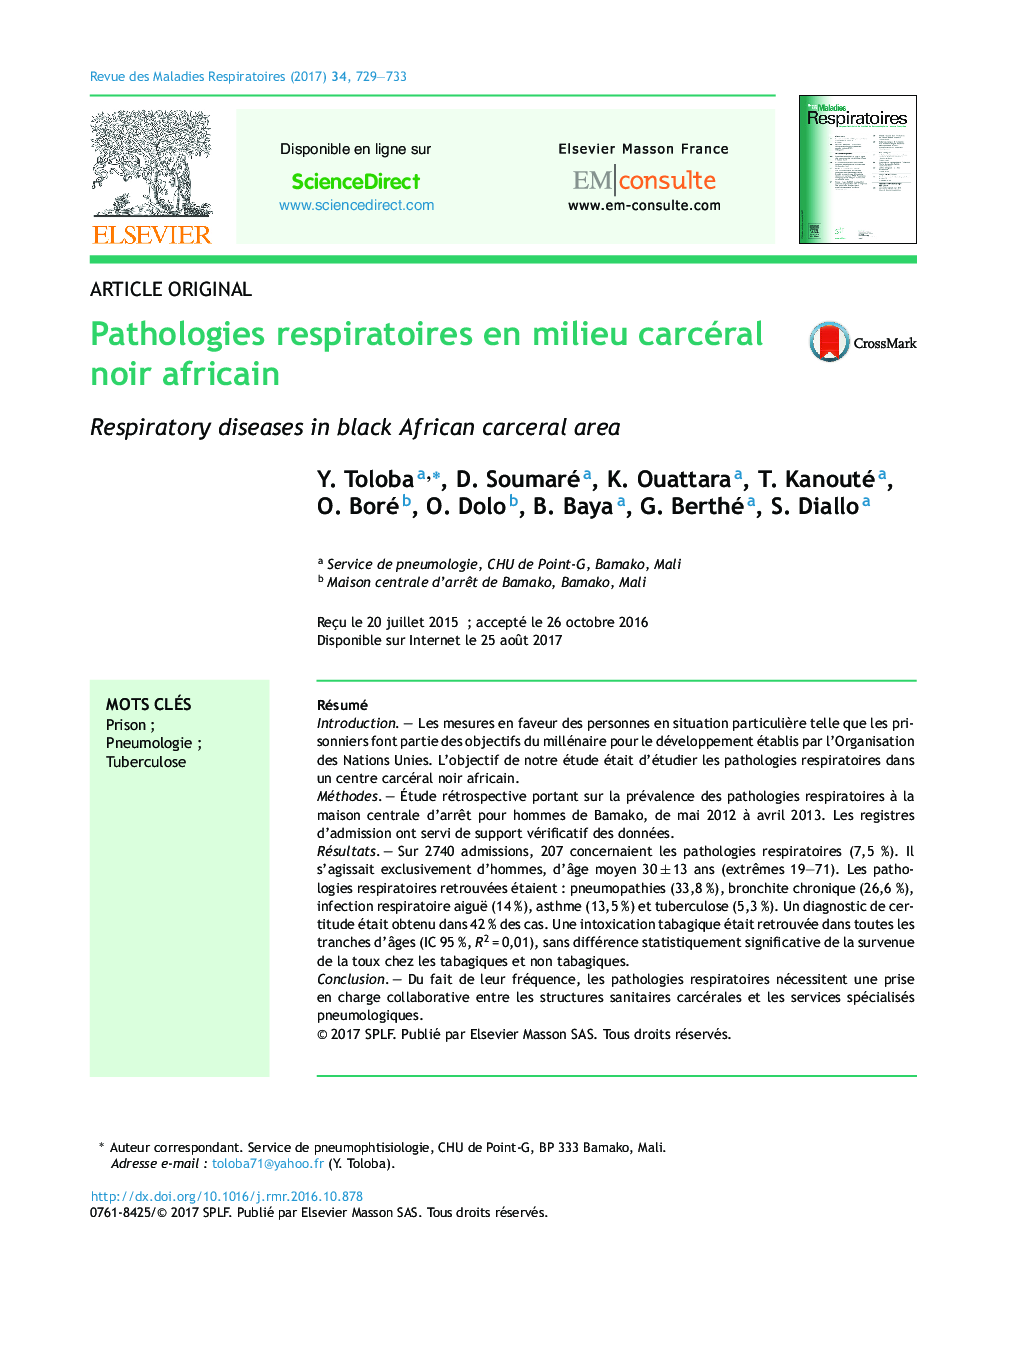 Pathologies respiratoires en milieu carcéral noir africain